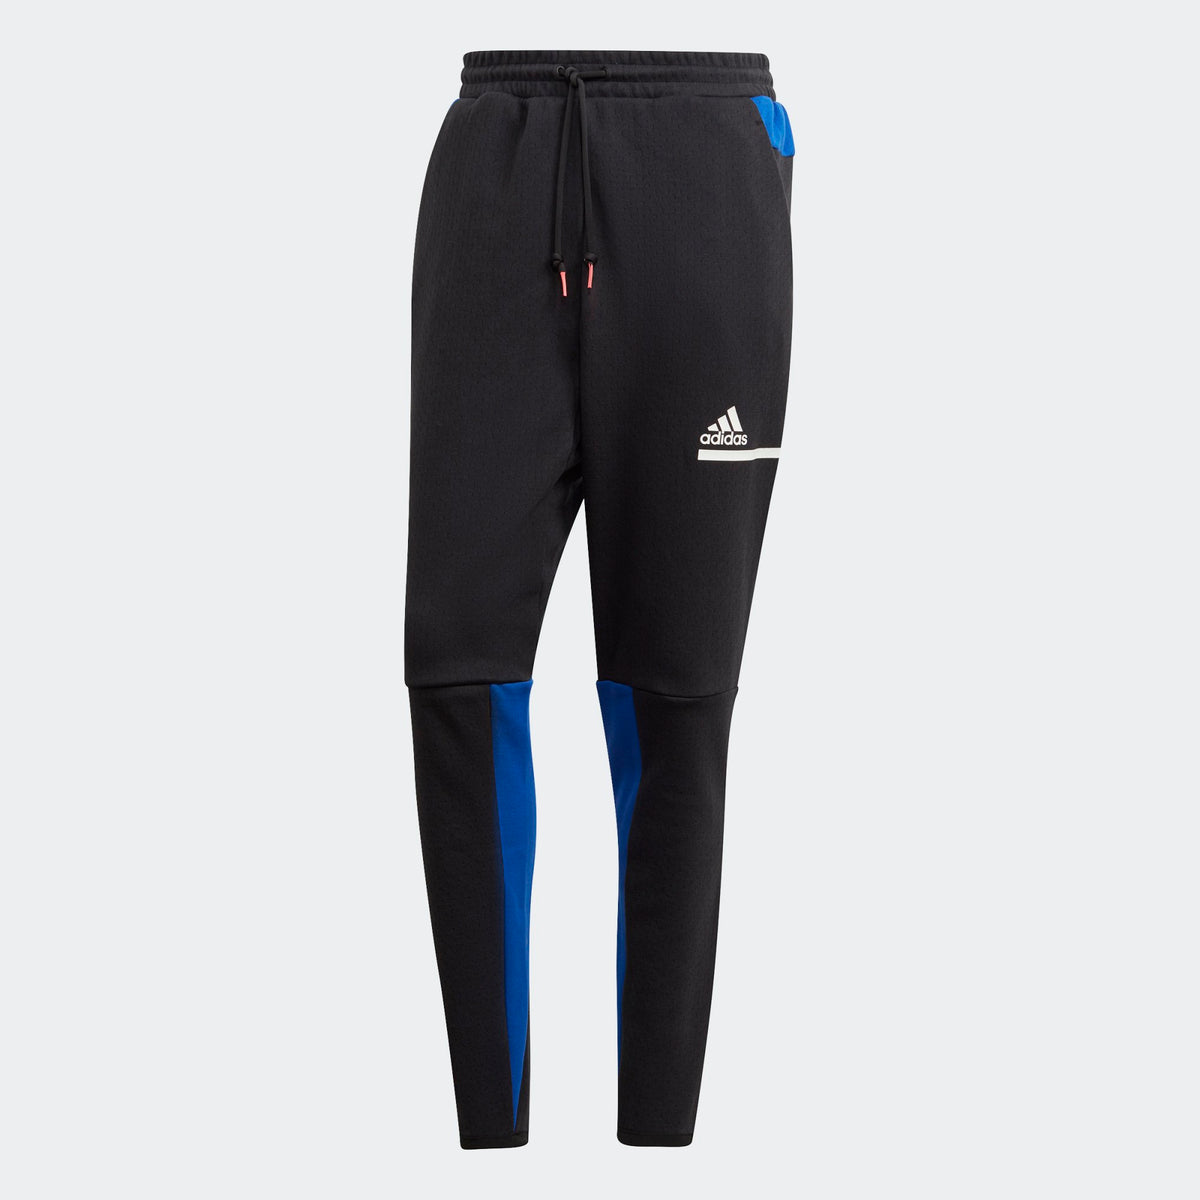 tradesports.co.uk Adidas Men's ZNE Track Pants GM6544 - Black